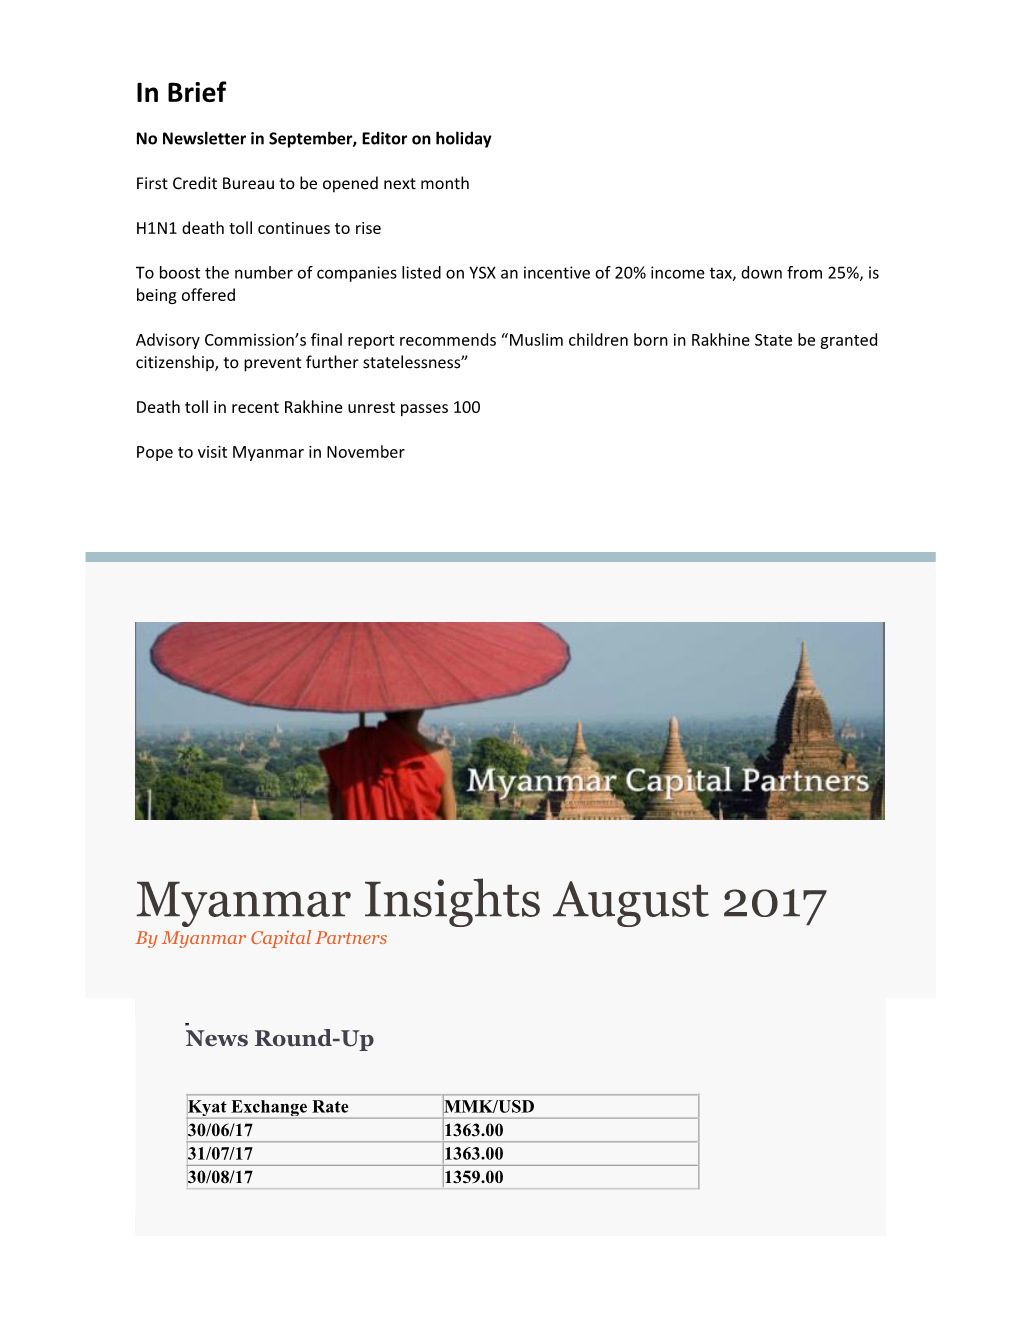 Myanmar Insights August 2017 by Myanmar Capital Partners